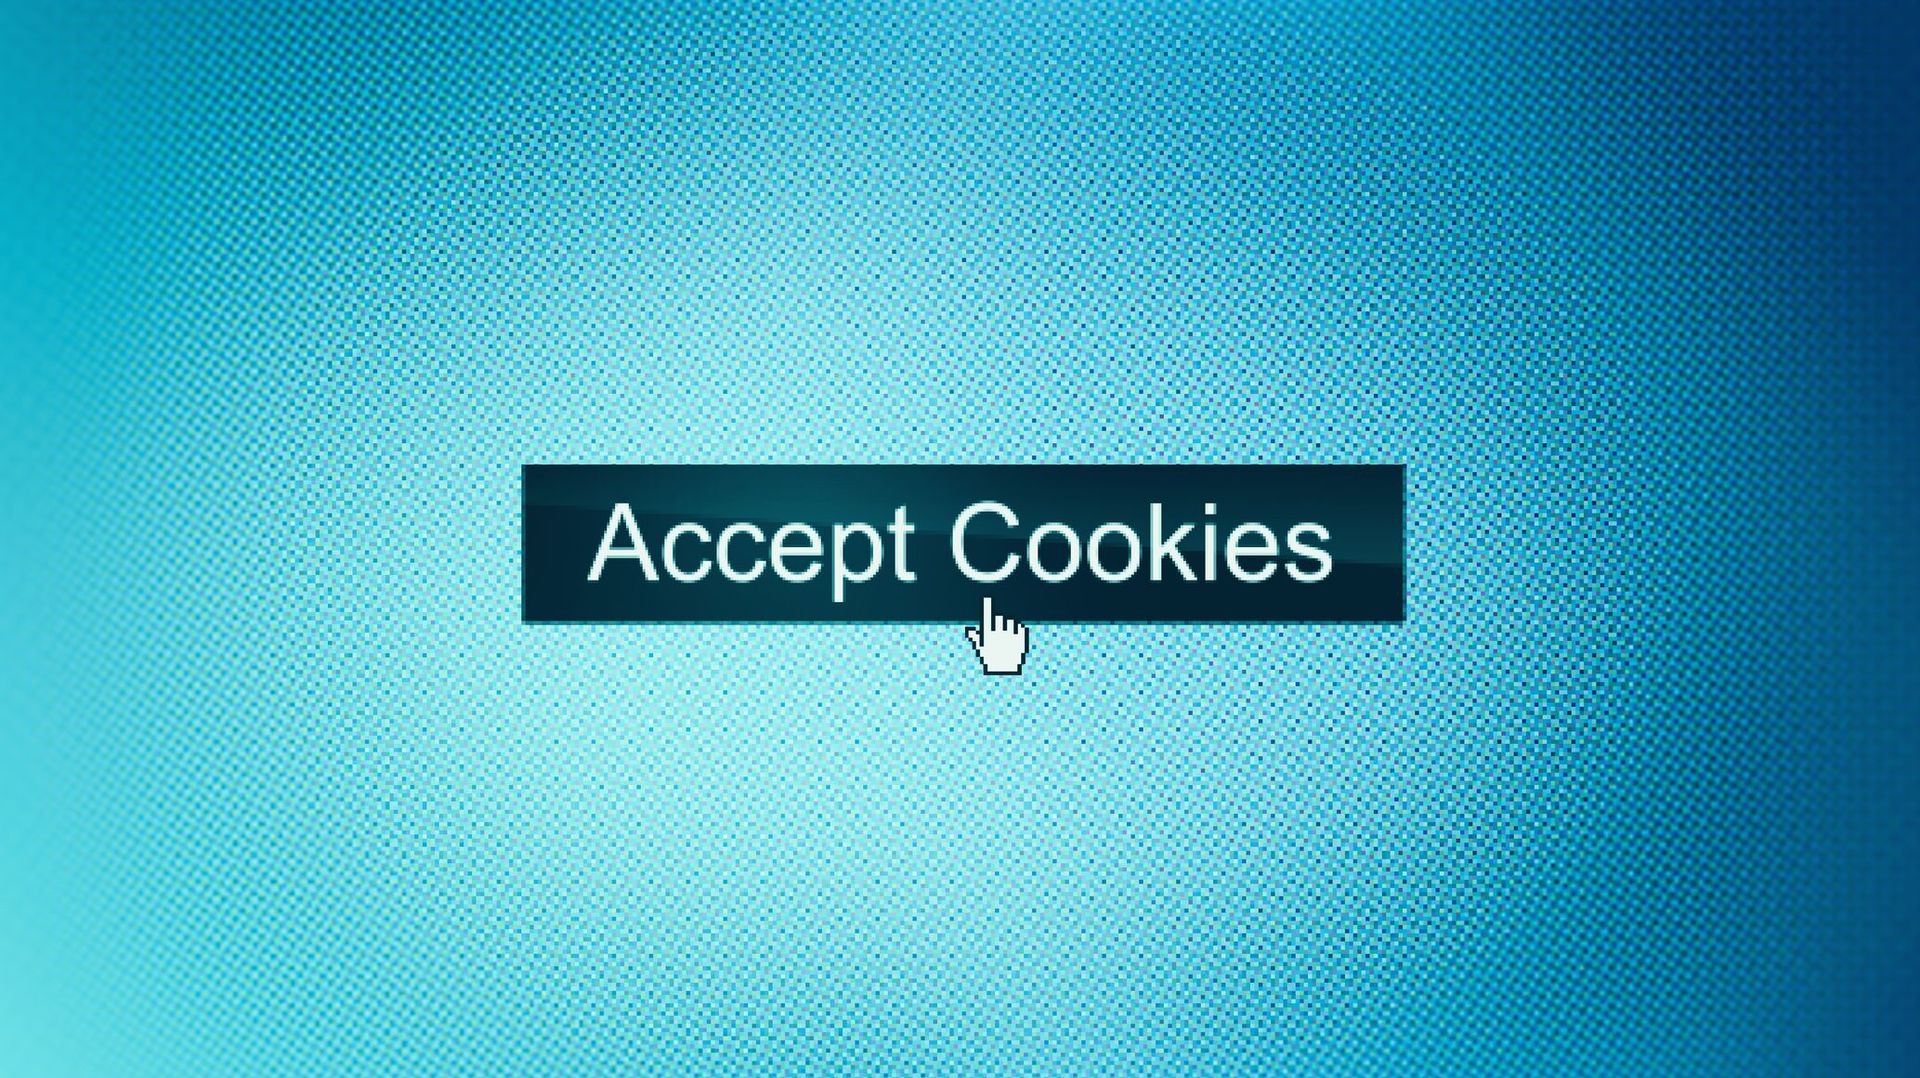 Accept cookies website button